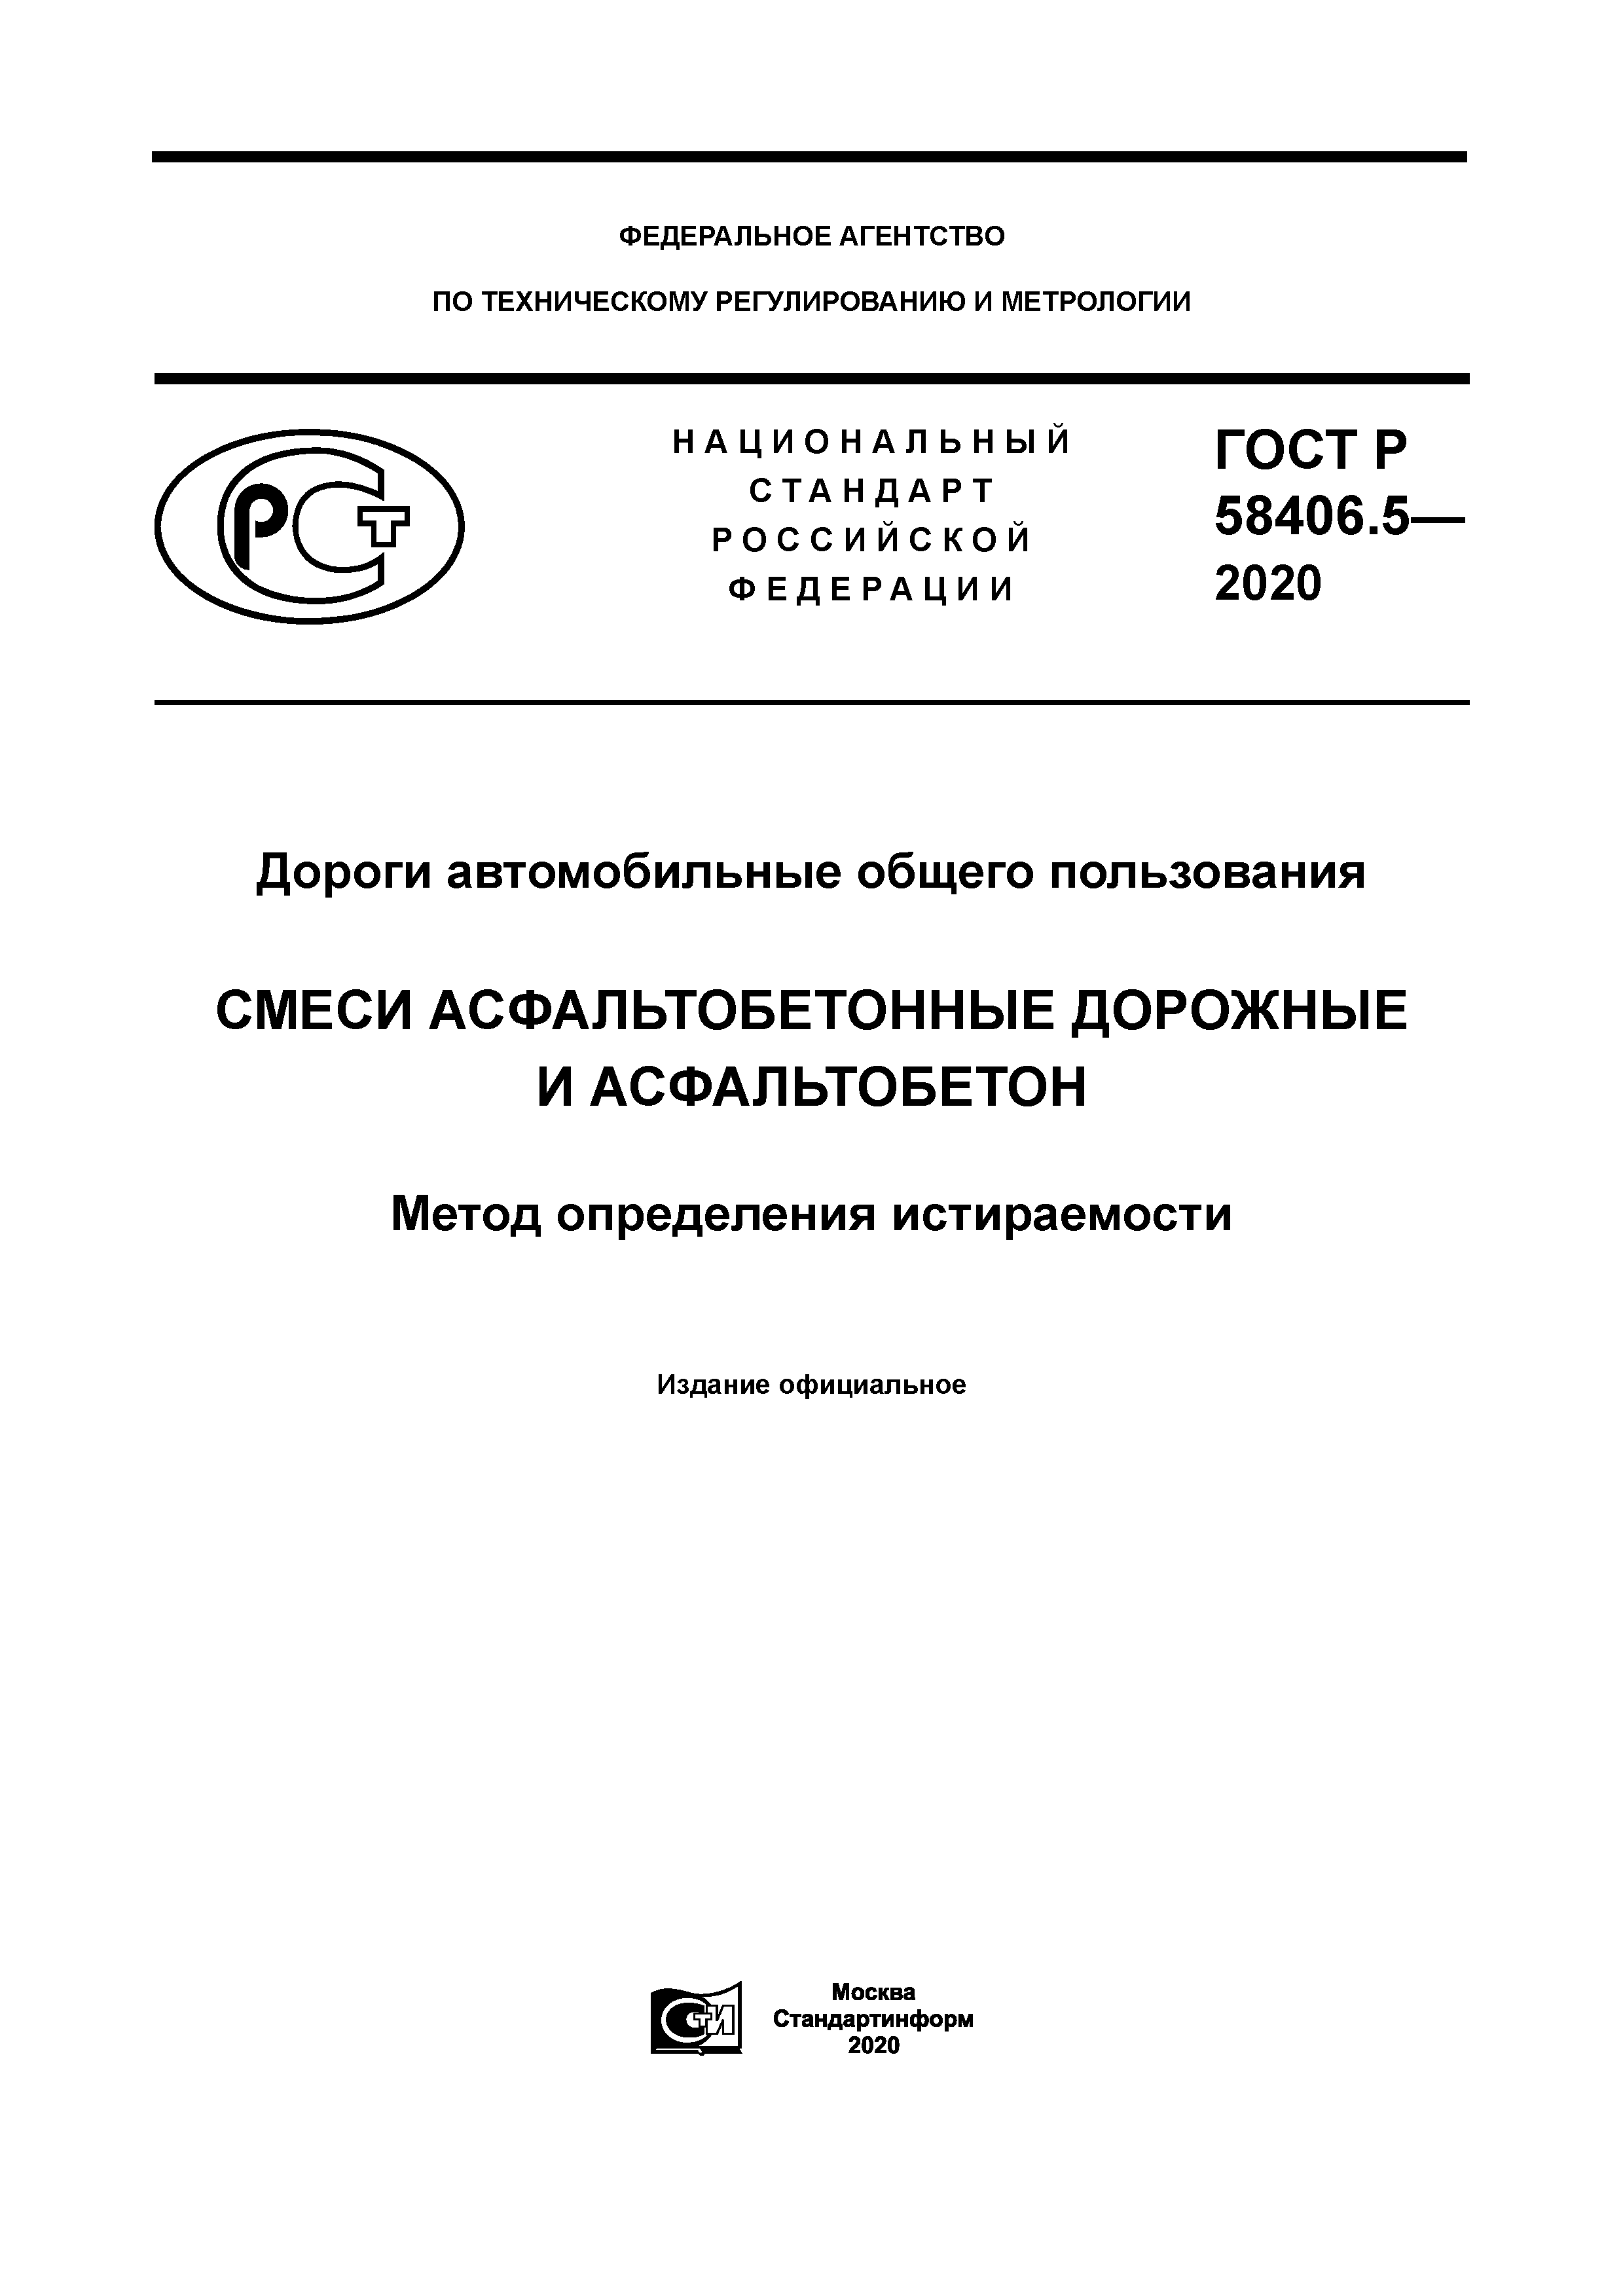 ГОСТ Р 58406.5-2020